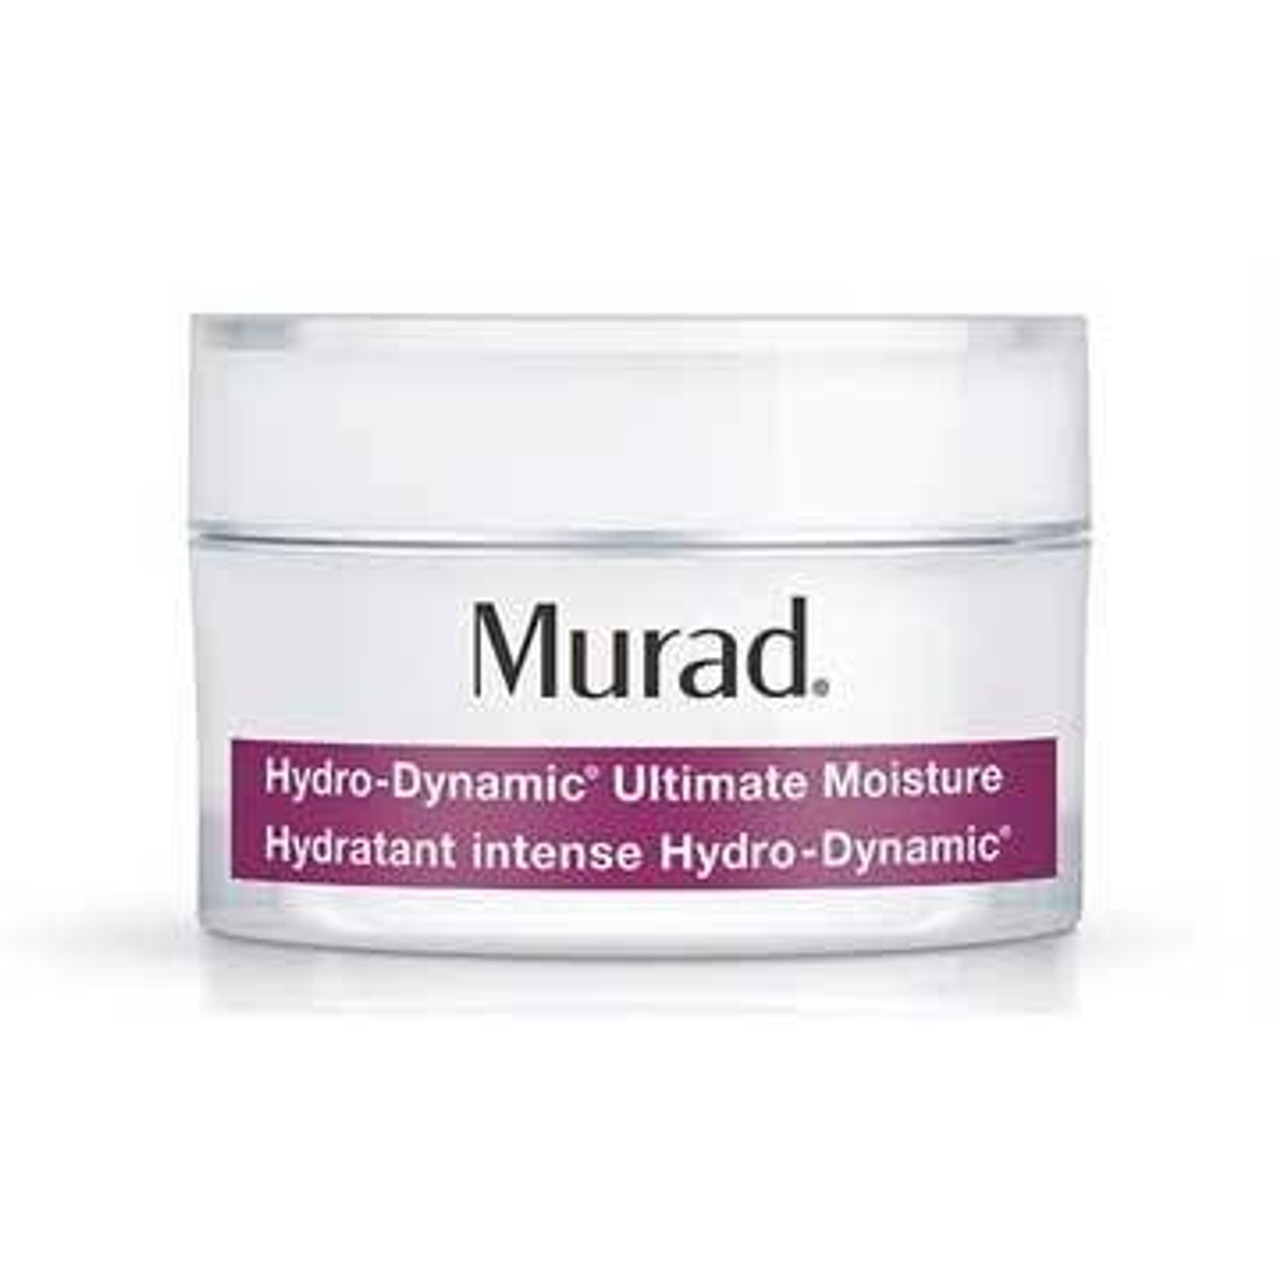 Murad Age Reform Hydro-Dynamic Ultimate Moisture - 1.7 oz